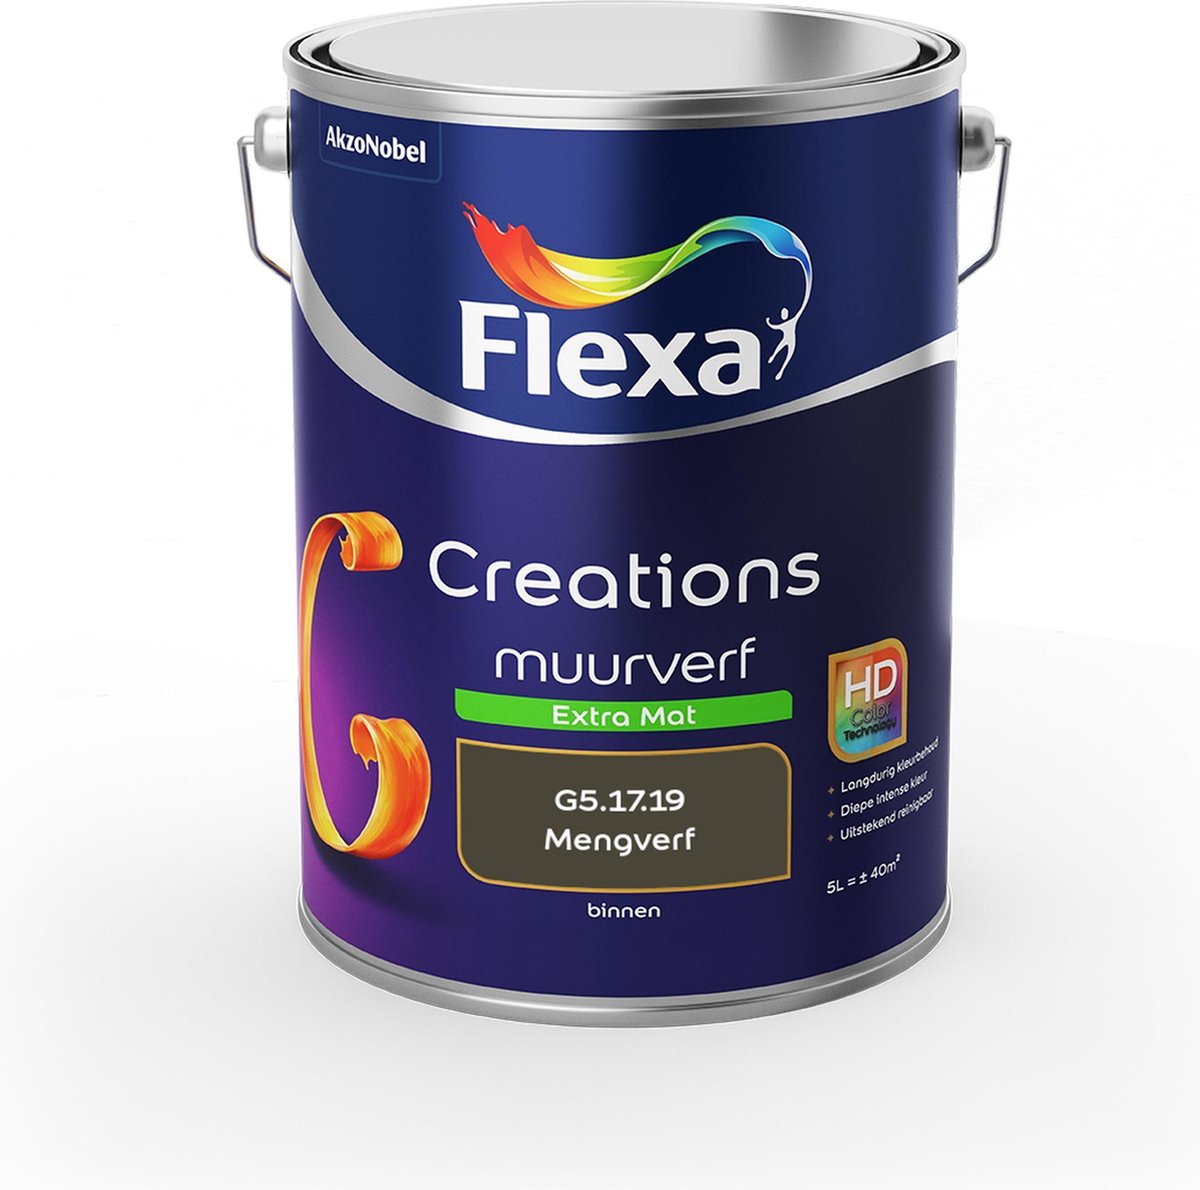 Flexa Creations Muurverf - Extra Mat - Colorfutures 2019 - G5.17.19 - 5 liter